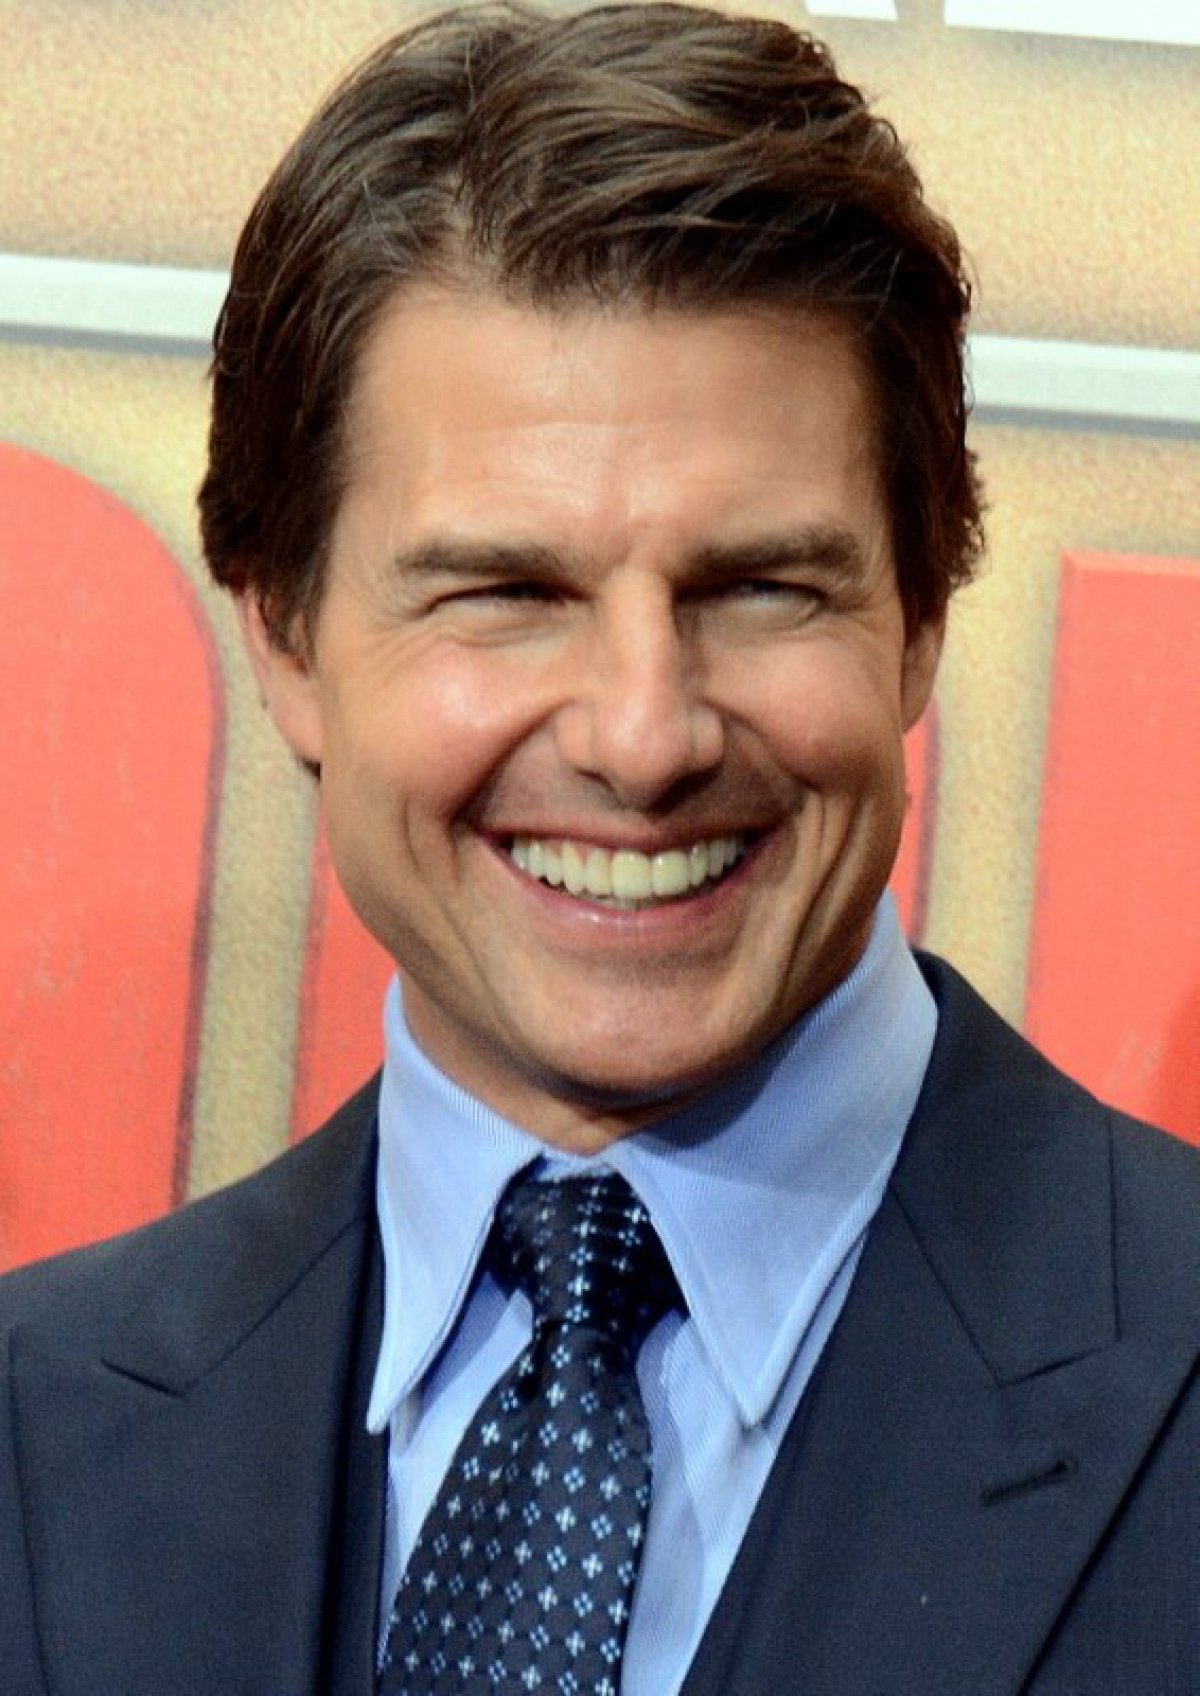 Tom Cruise: $53 millones de dólares por película